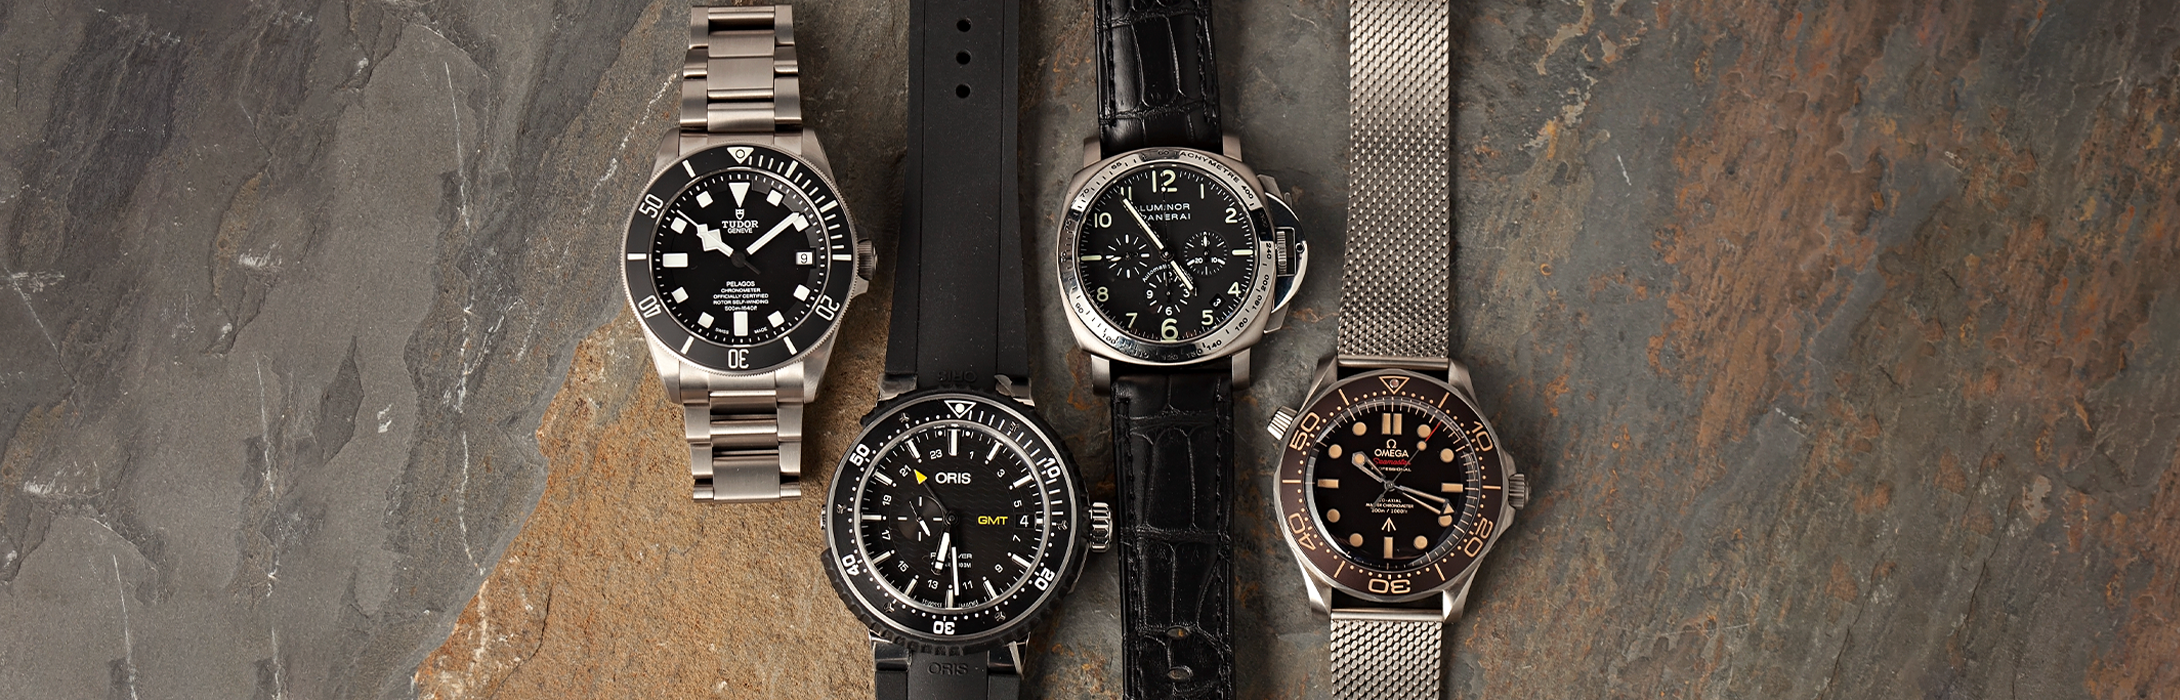 Titanium Luxury Watches